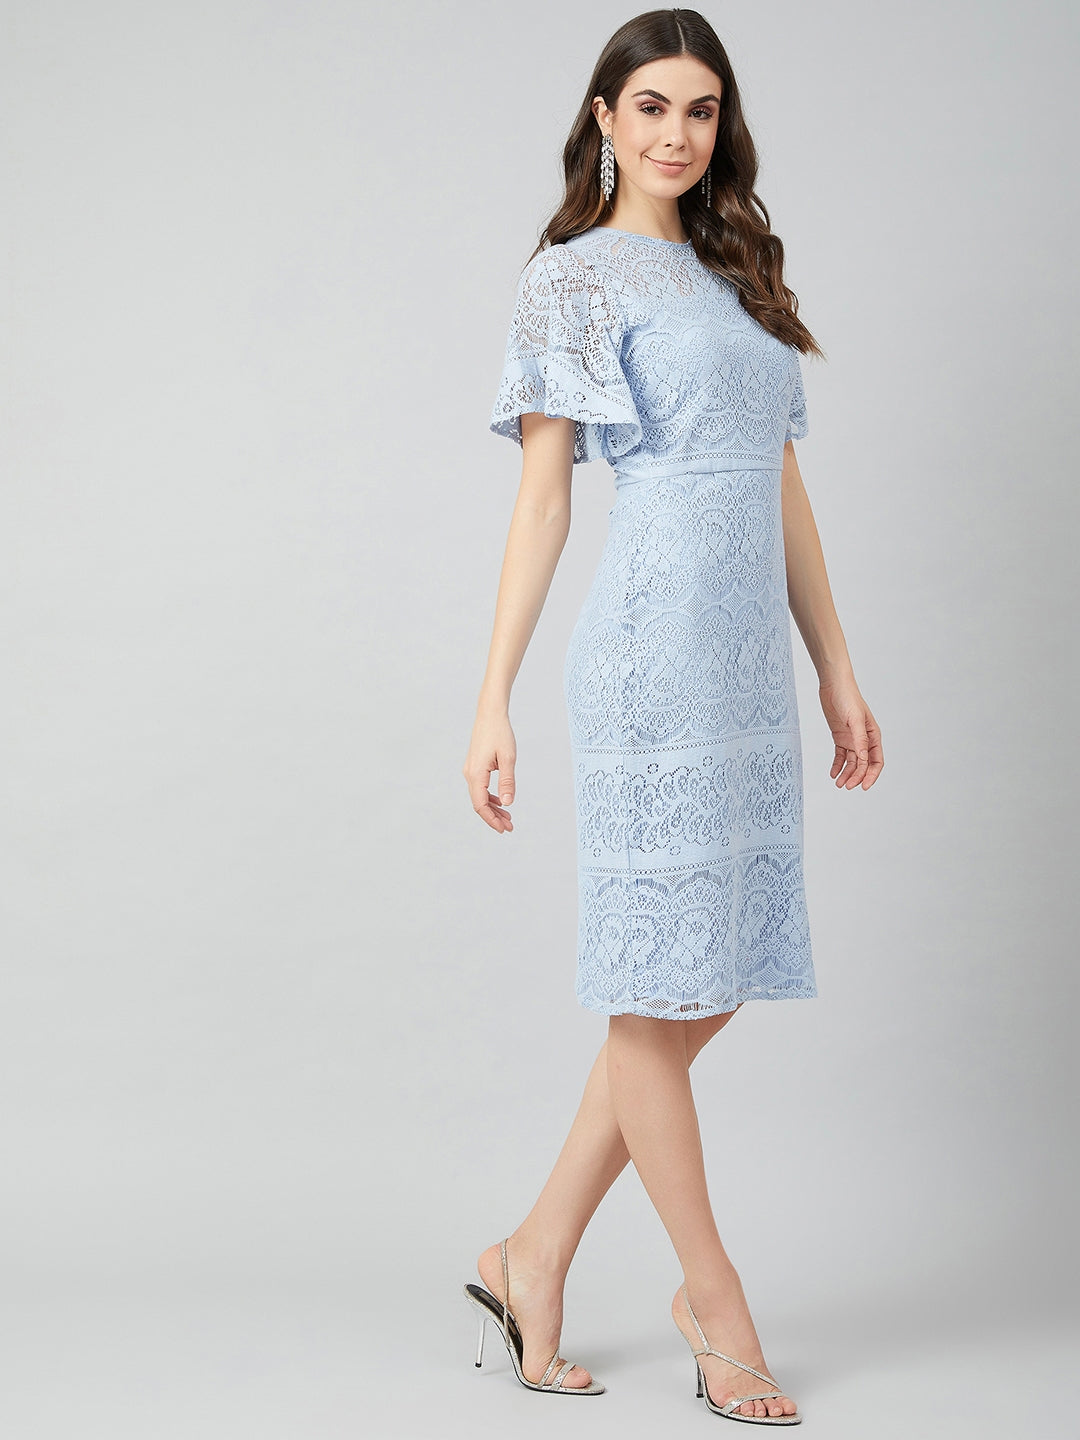 Athena Blue Self Design Sheath Dress - Athena Lifestyle